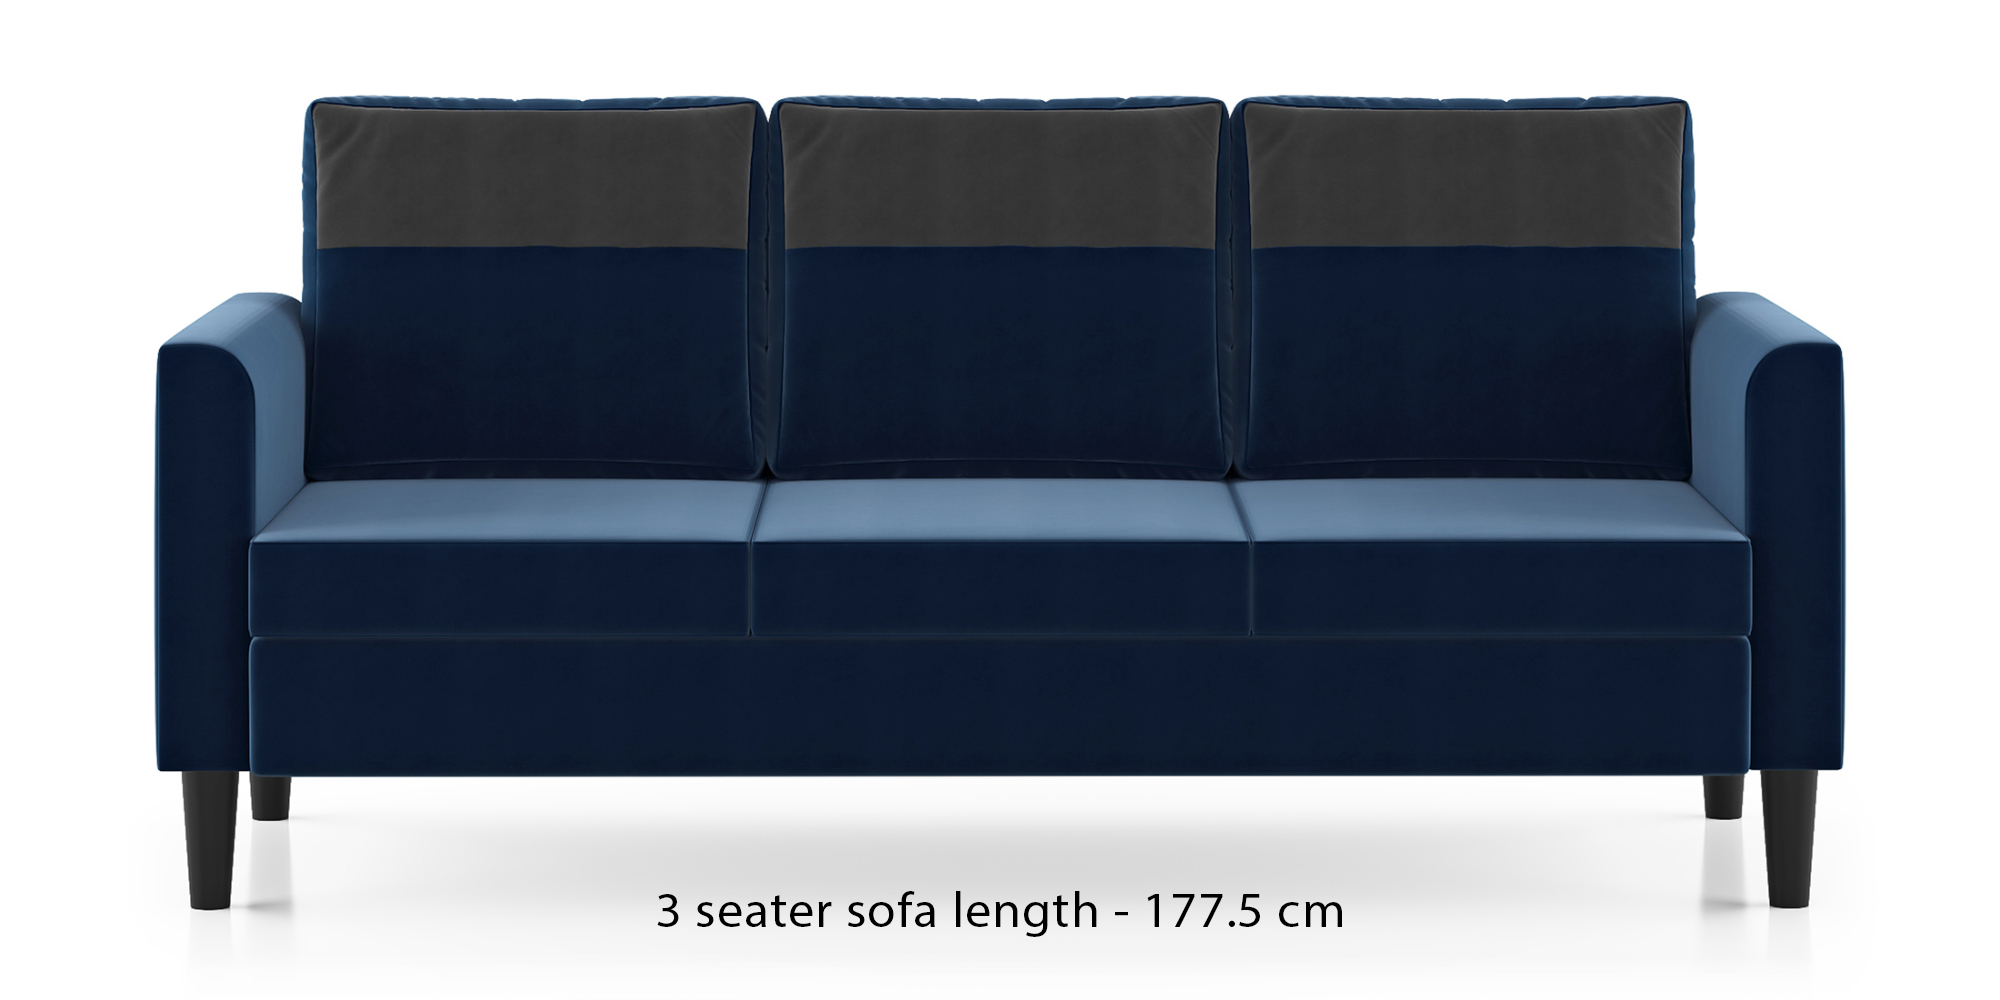 Hugo Fabric Sofa (Marine Blue) (3-seater Custom Set - Sofas, None Standard Set - Sofas, Fabric Sofa Material, Regular Sofa Size, Regular Sofa Type, Marine Blue) by Urban Ladder - - 575224